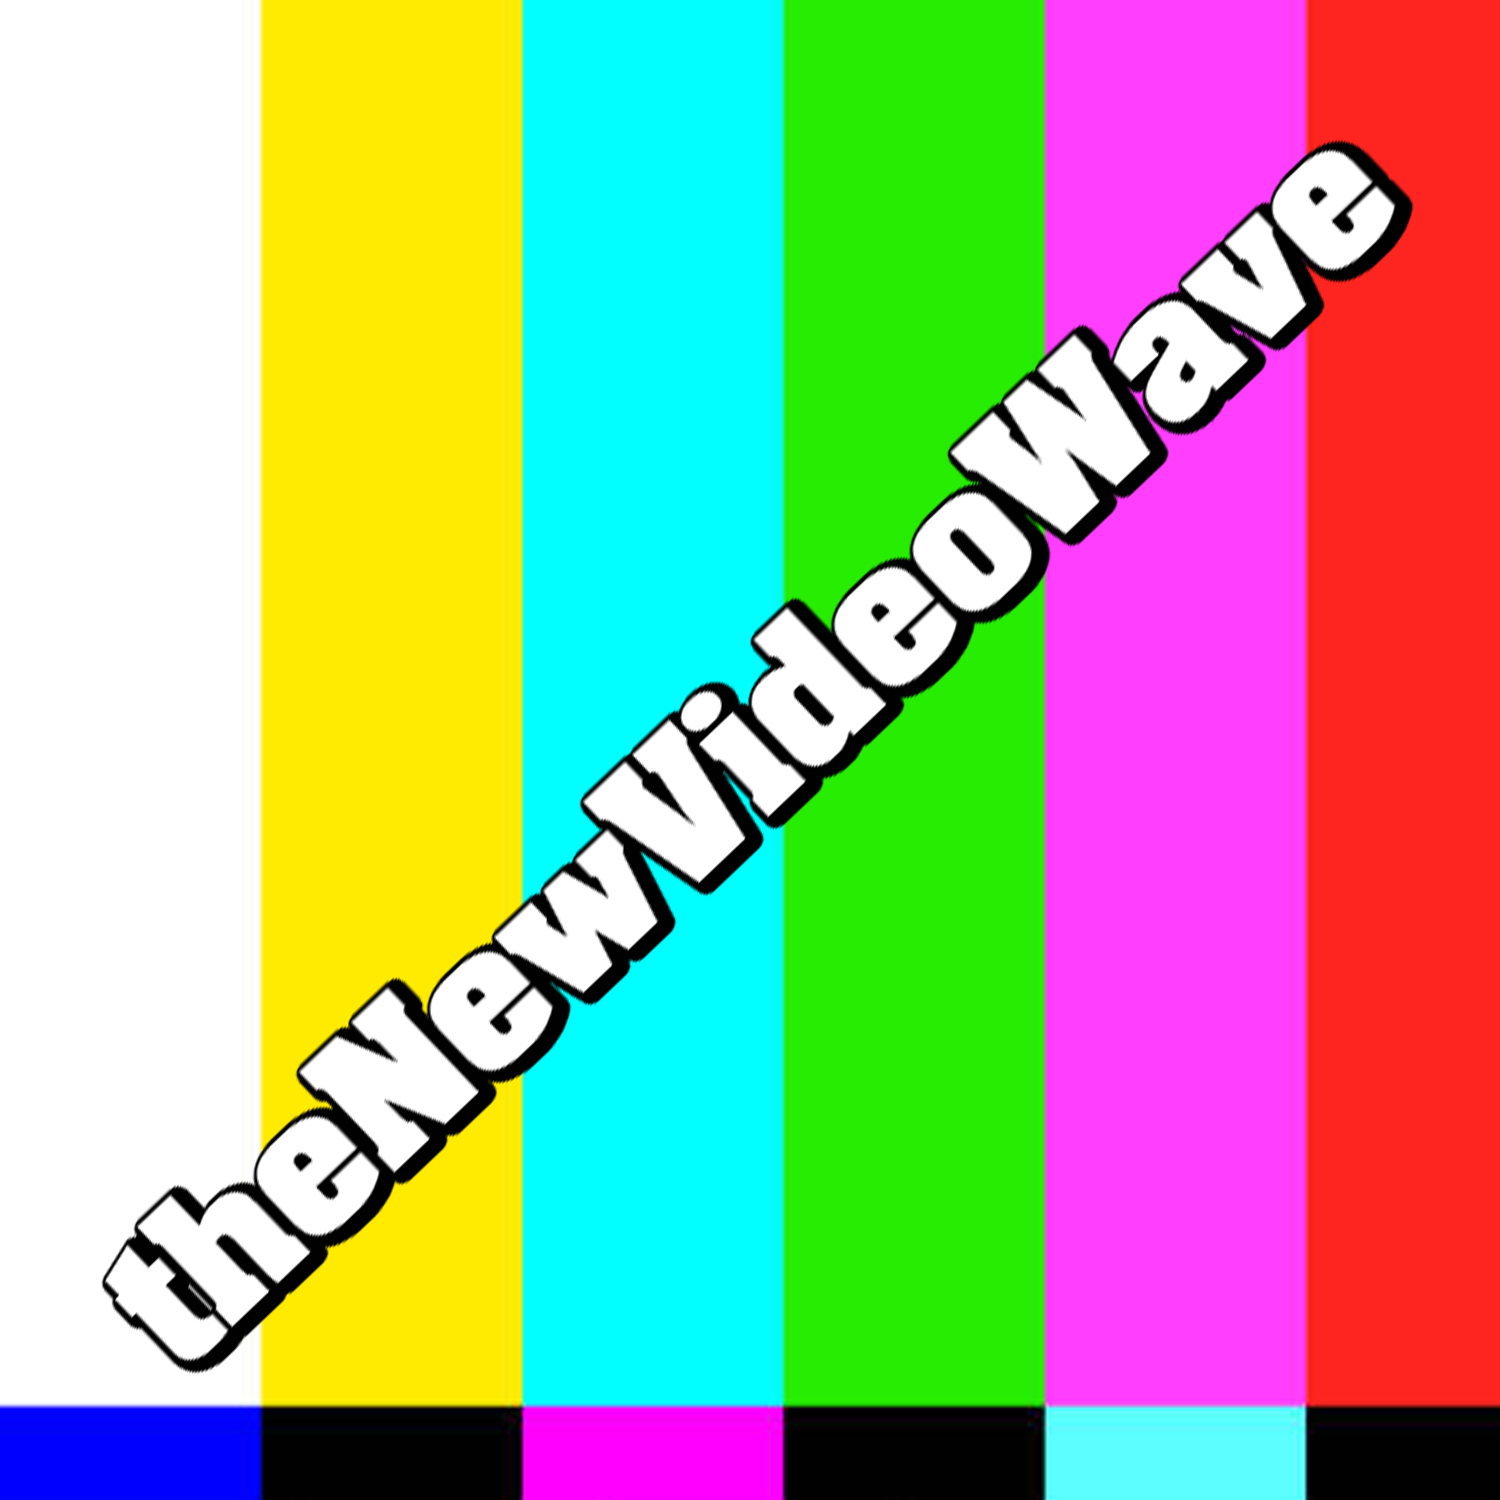 theNewVideoWave